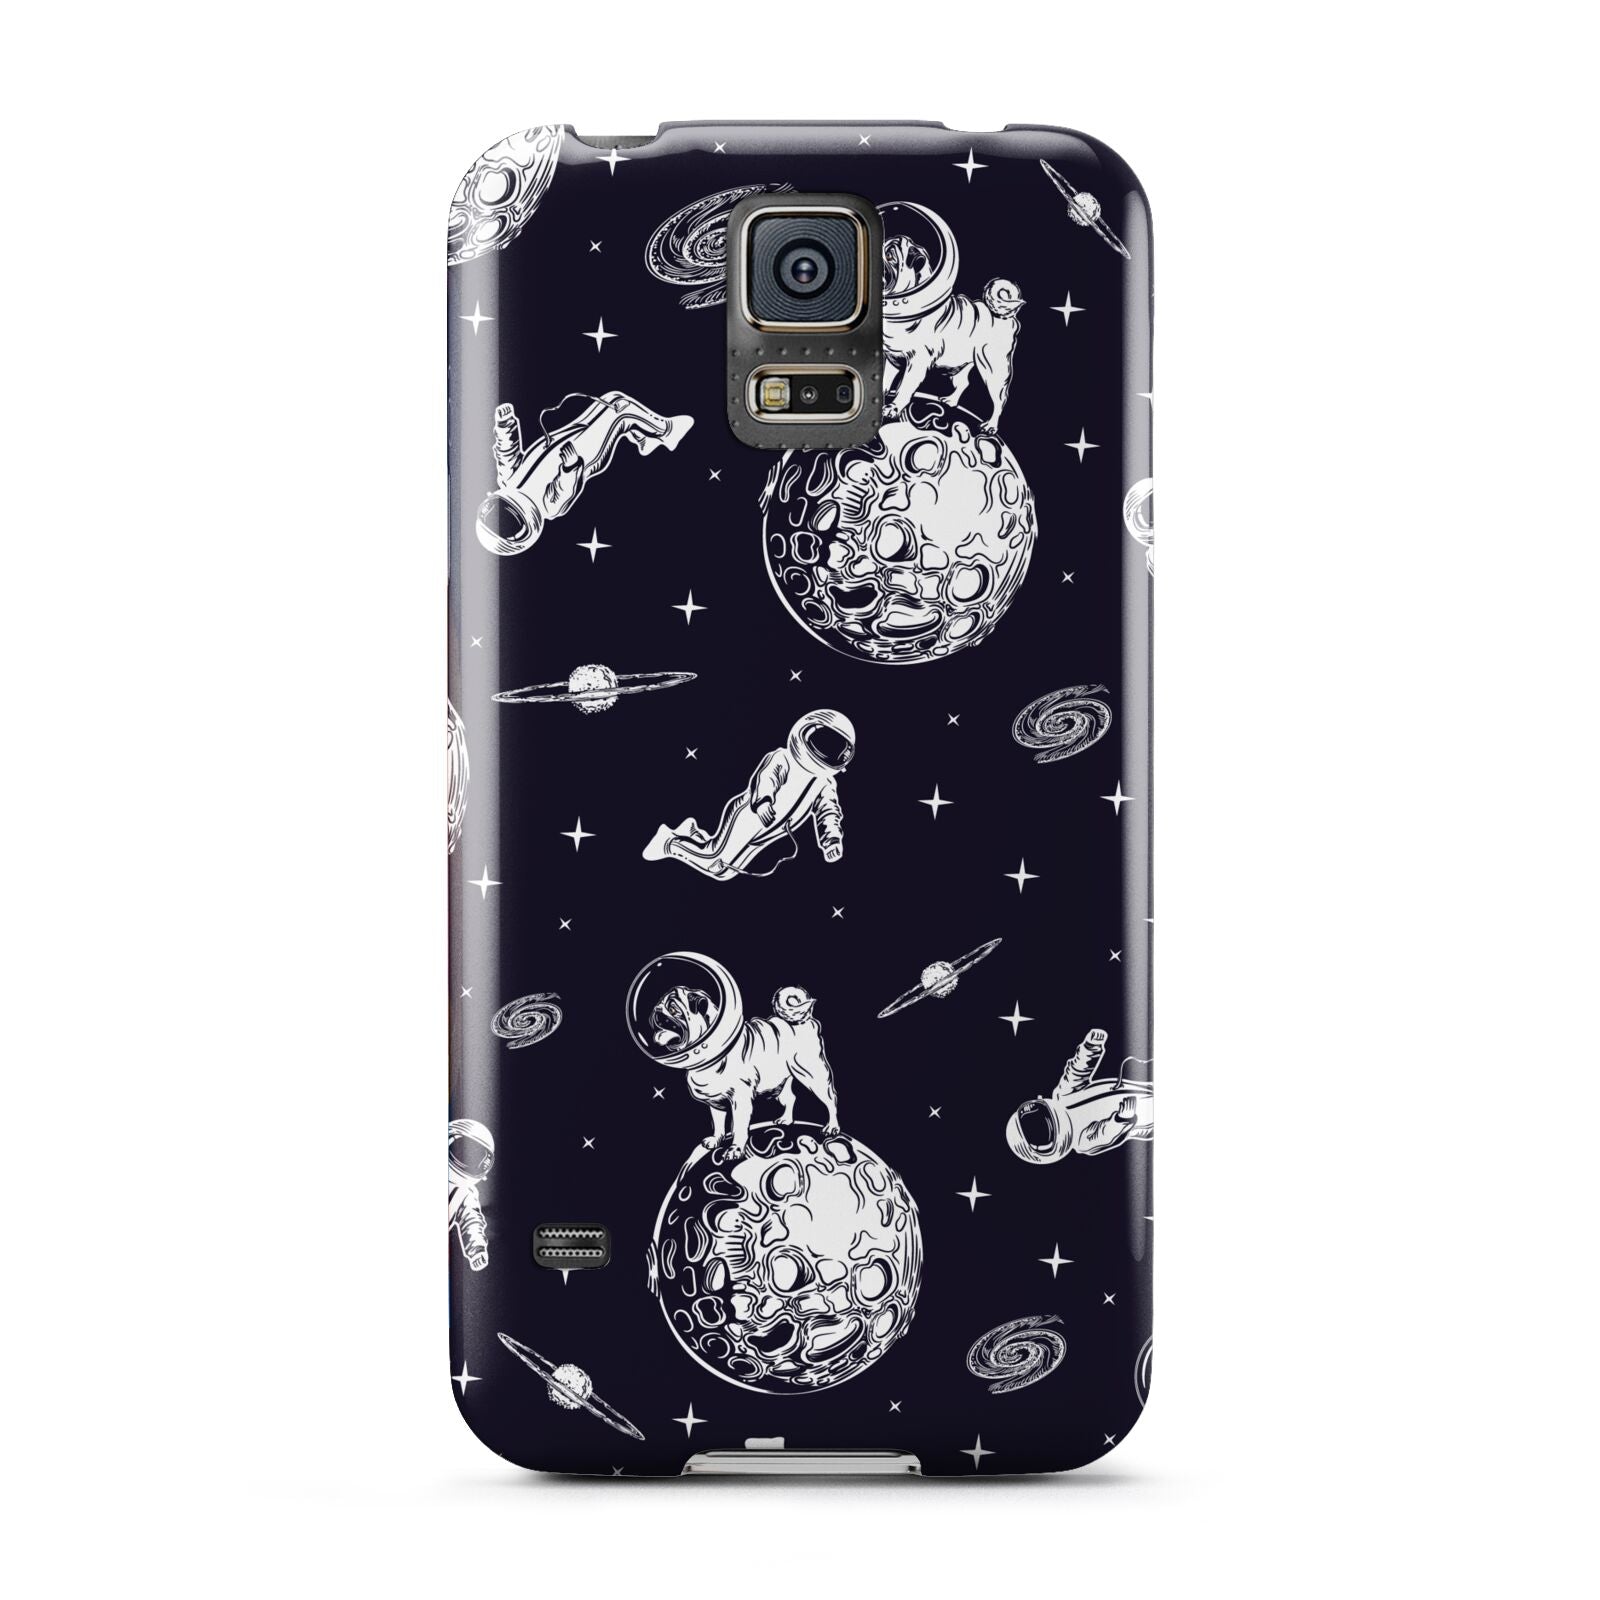 Pug in Space Samsung Galaxy S5 Case